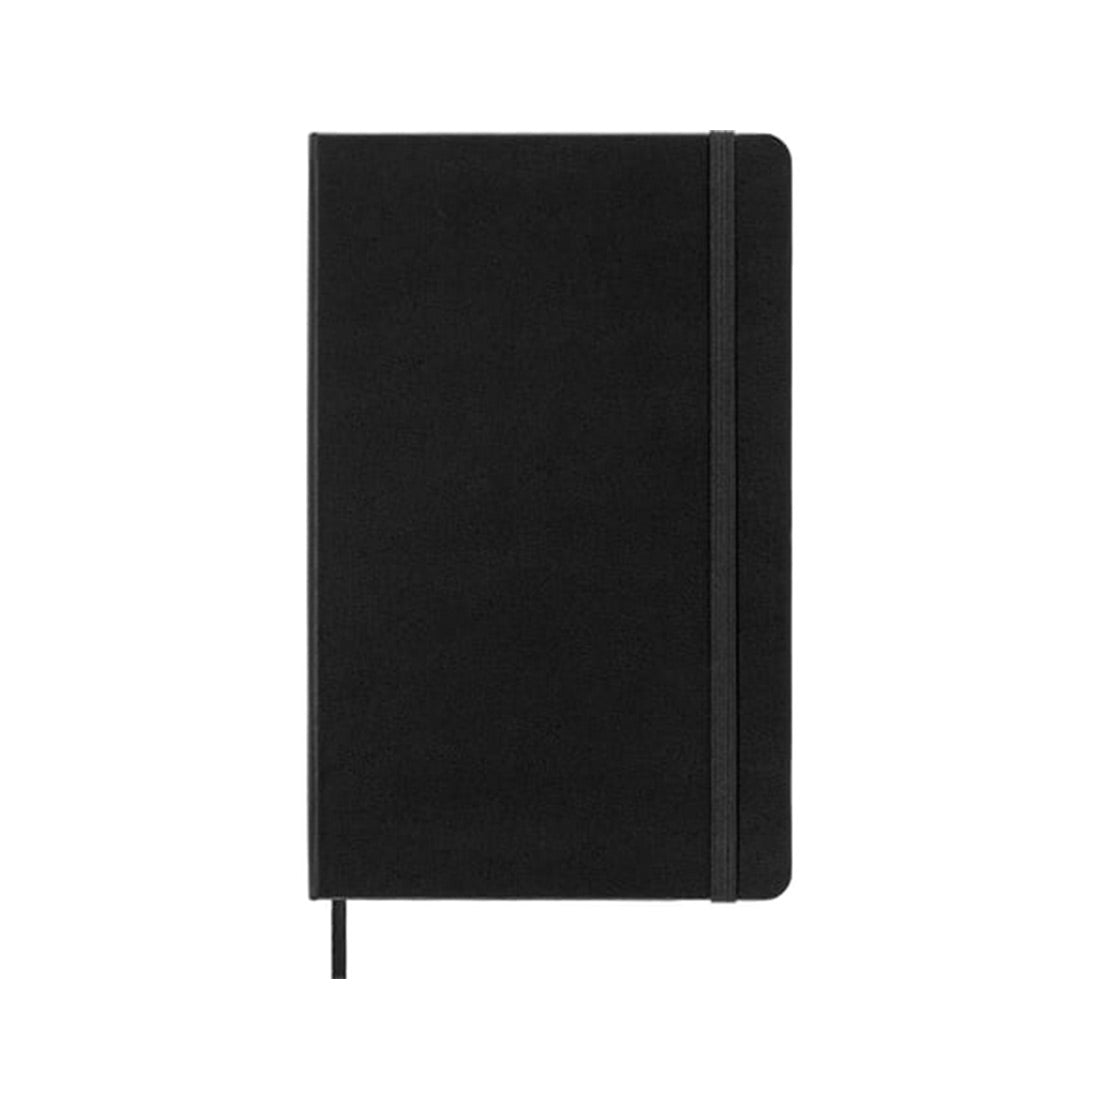 Moleskine Hard Cover Medium Size Ruled Notebook Black